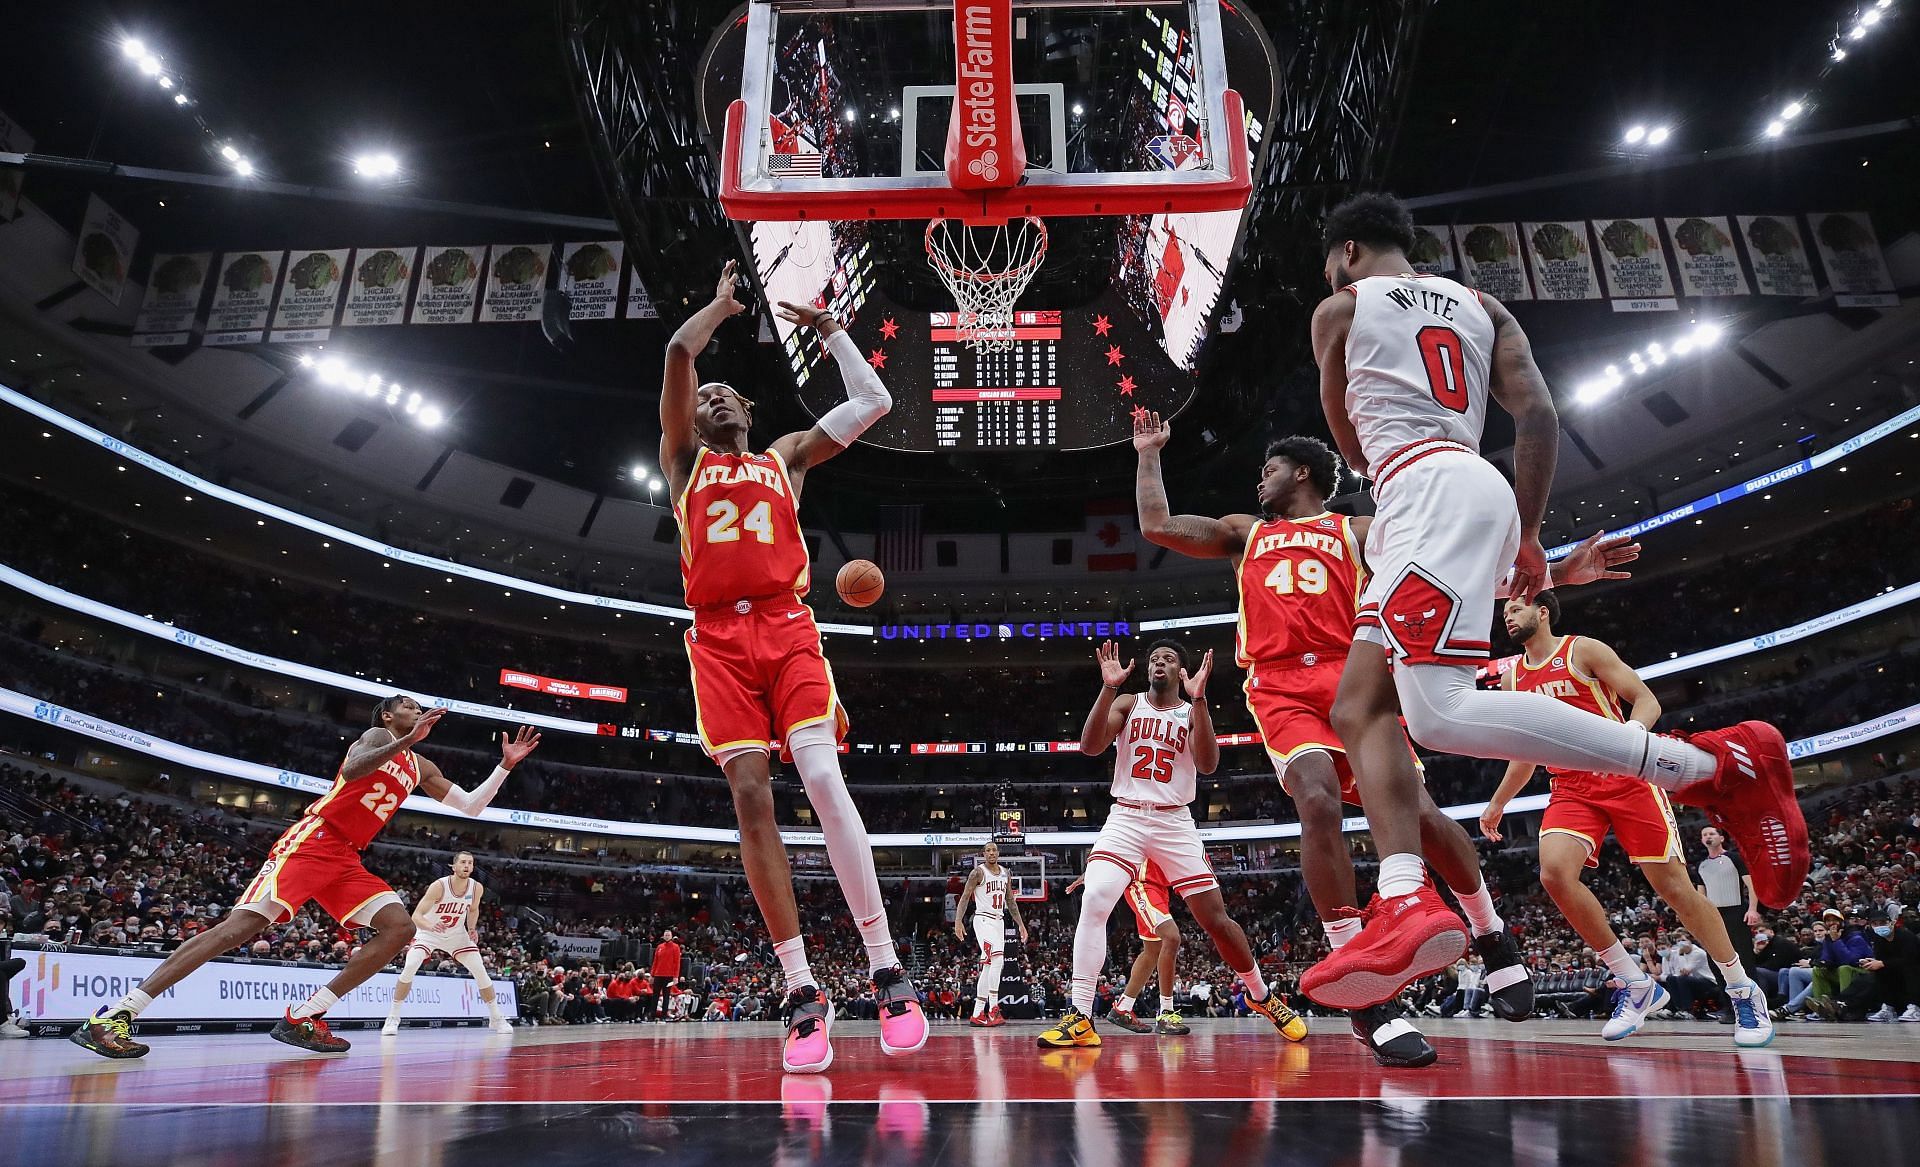 Atlanta Hawks will face the Chicago Bulls at the United Center on Thursday, February 24